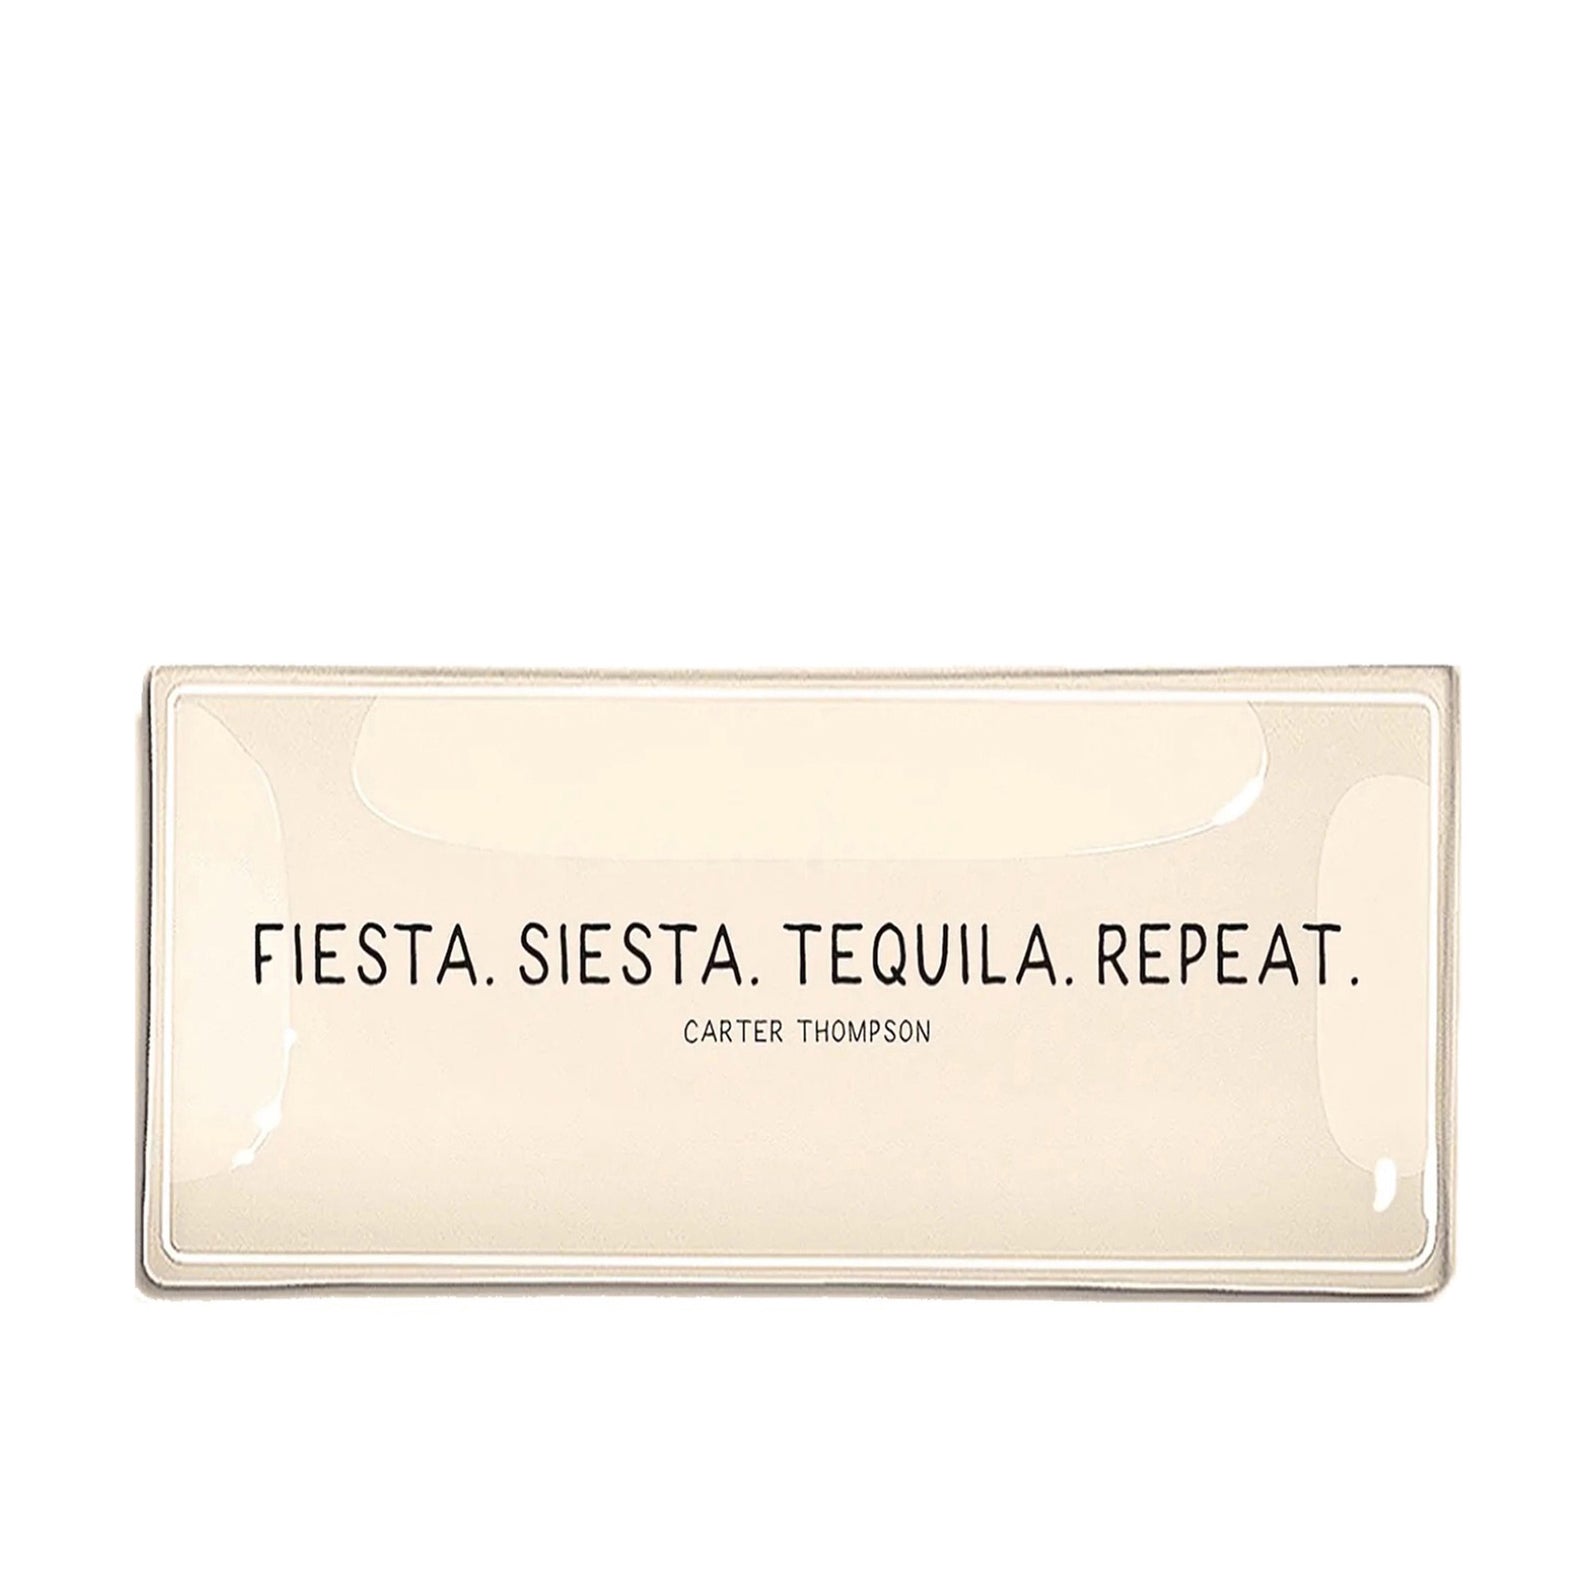 Glass Decoupage Tray - Fiesta. Siesta. Tequila. Repeat.